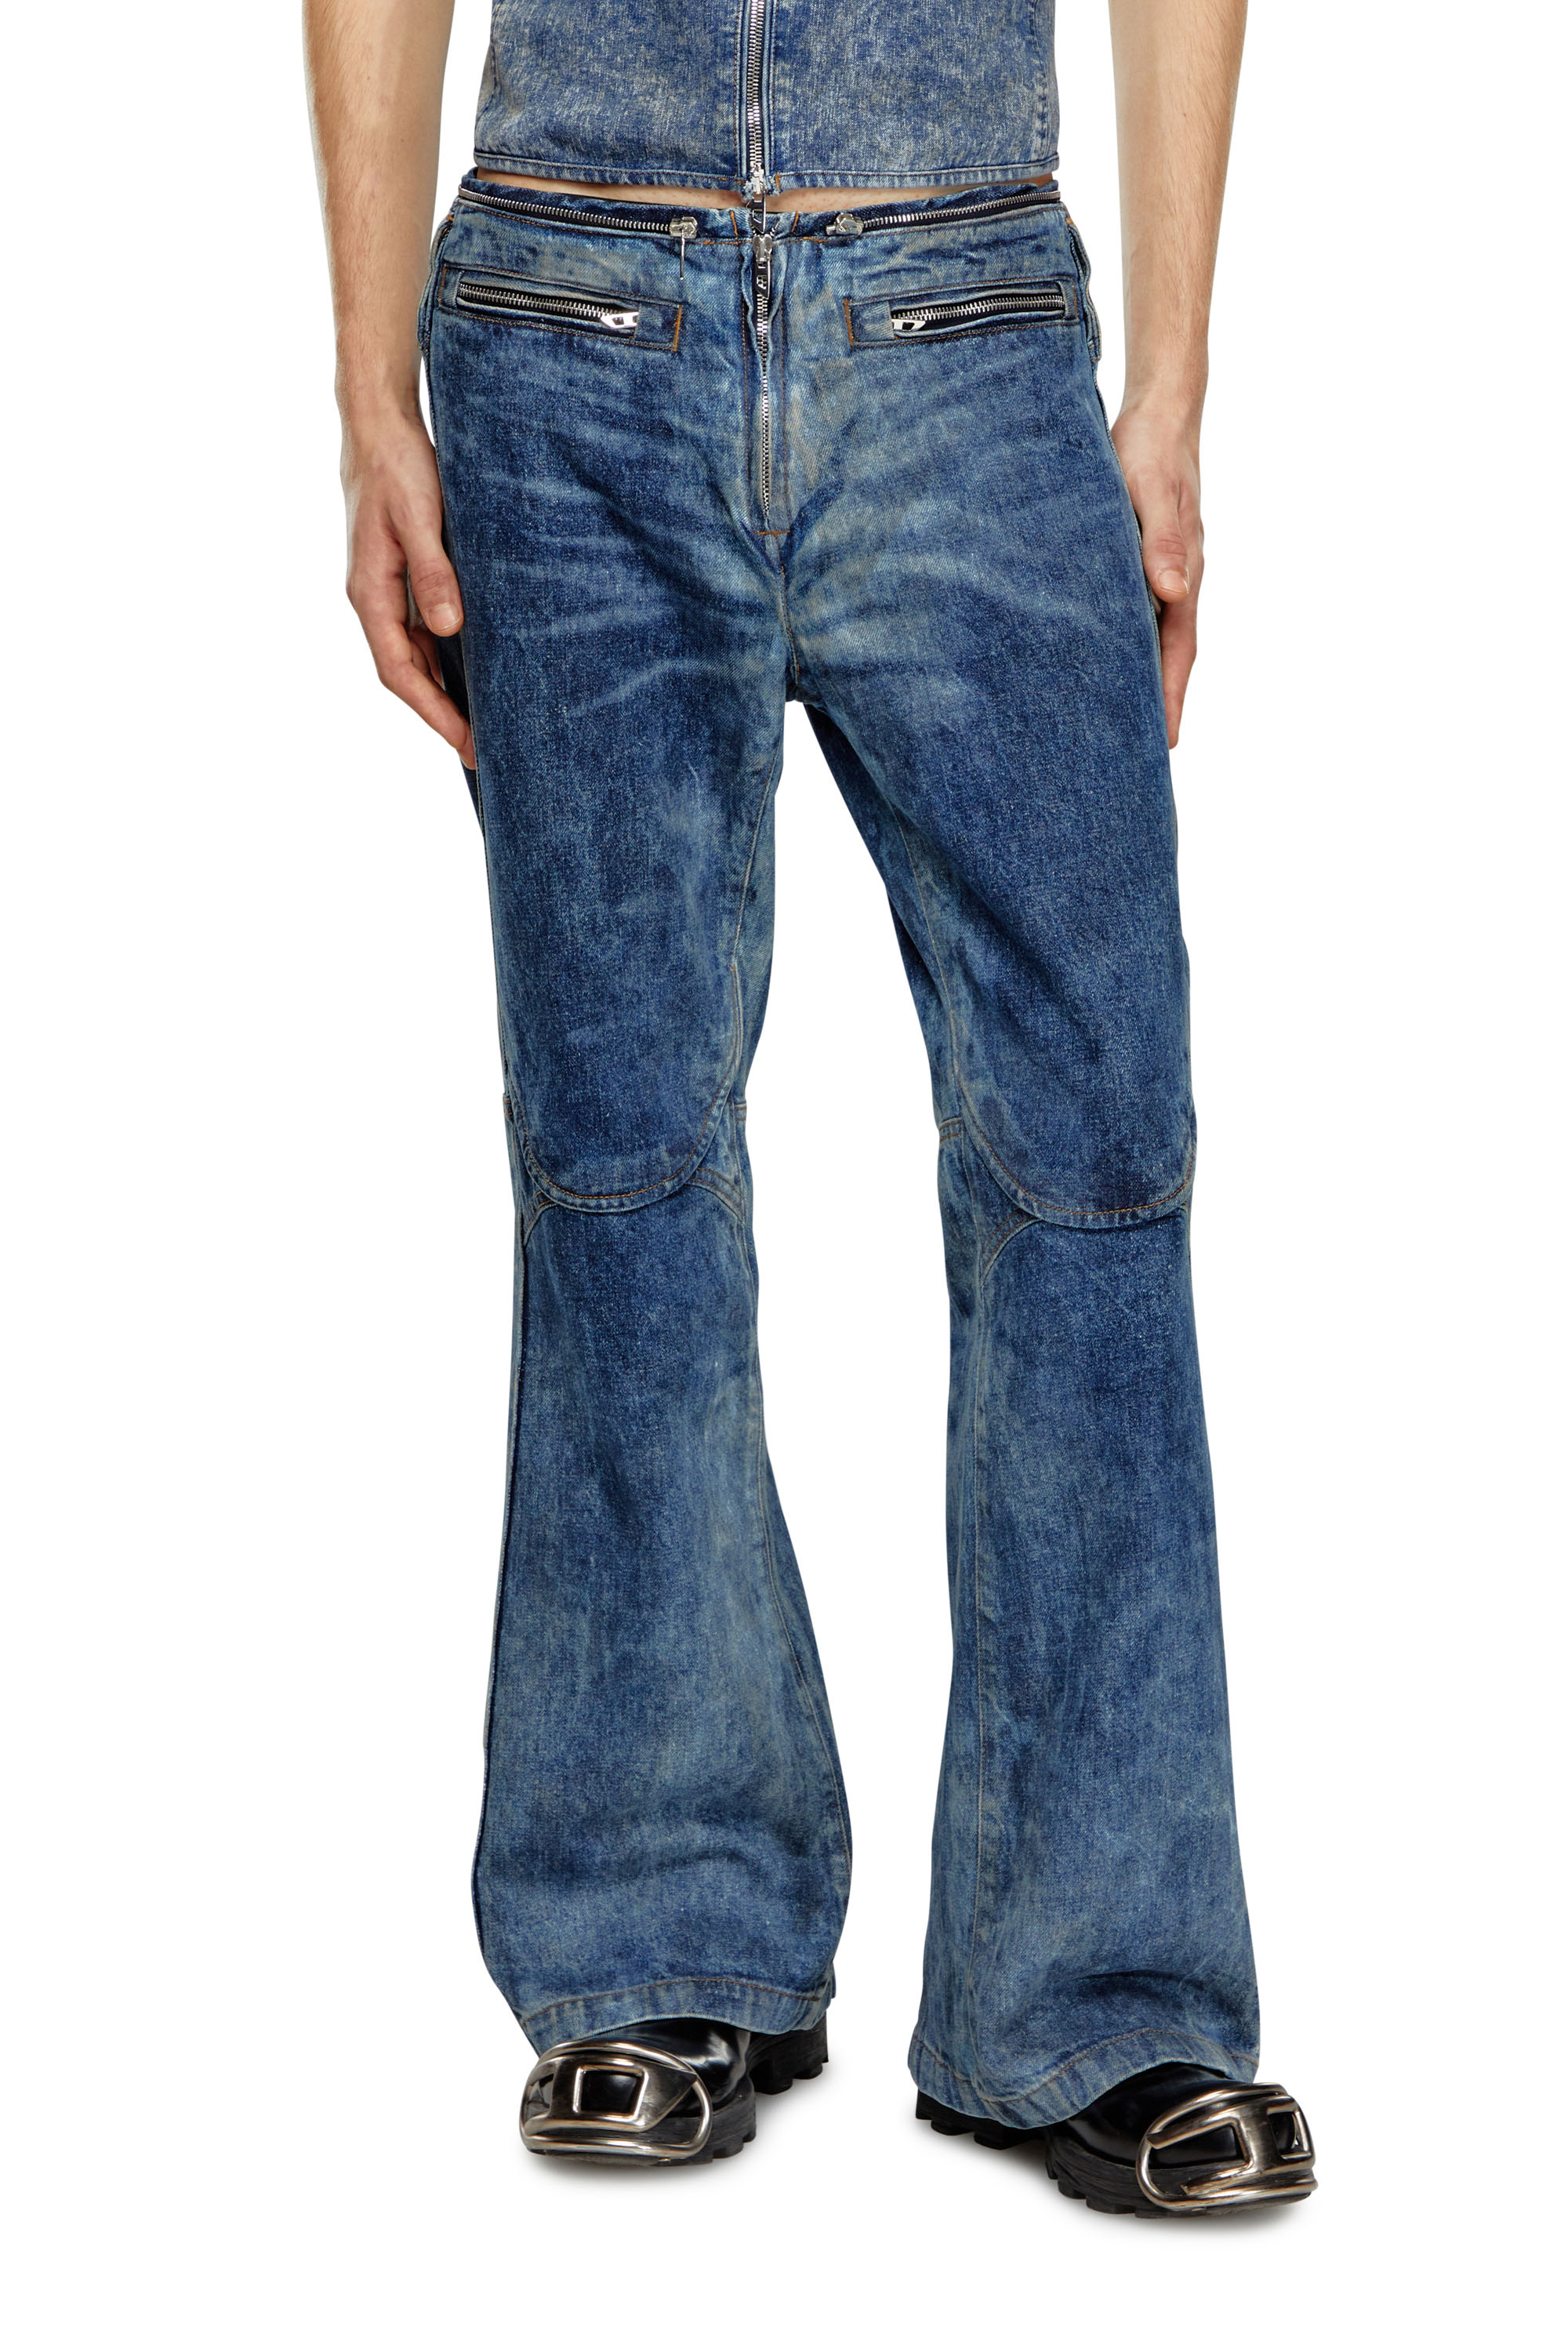 Diesel - Straight Jeans D-Gen 0PGAX, Hombre Straight Jeans - D-Gen in Azul marino - Image 2